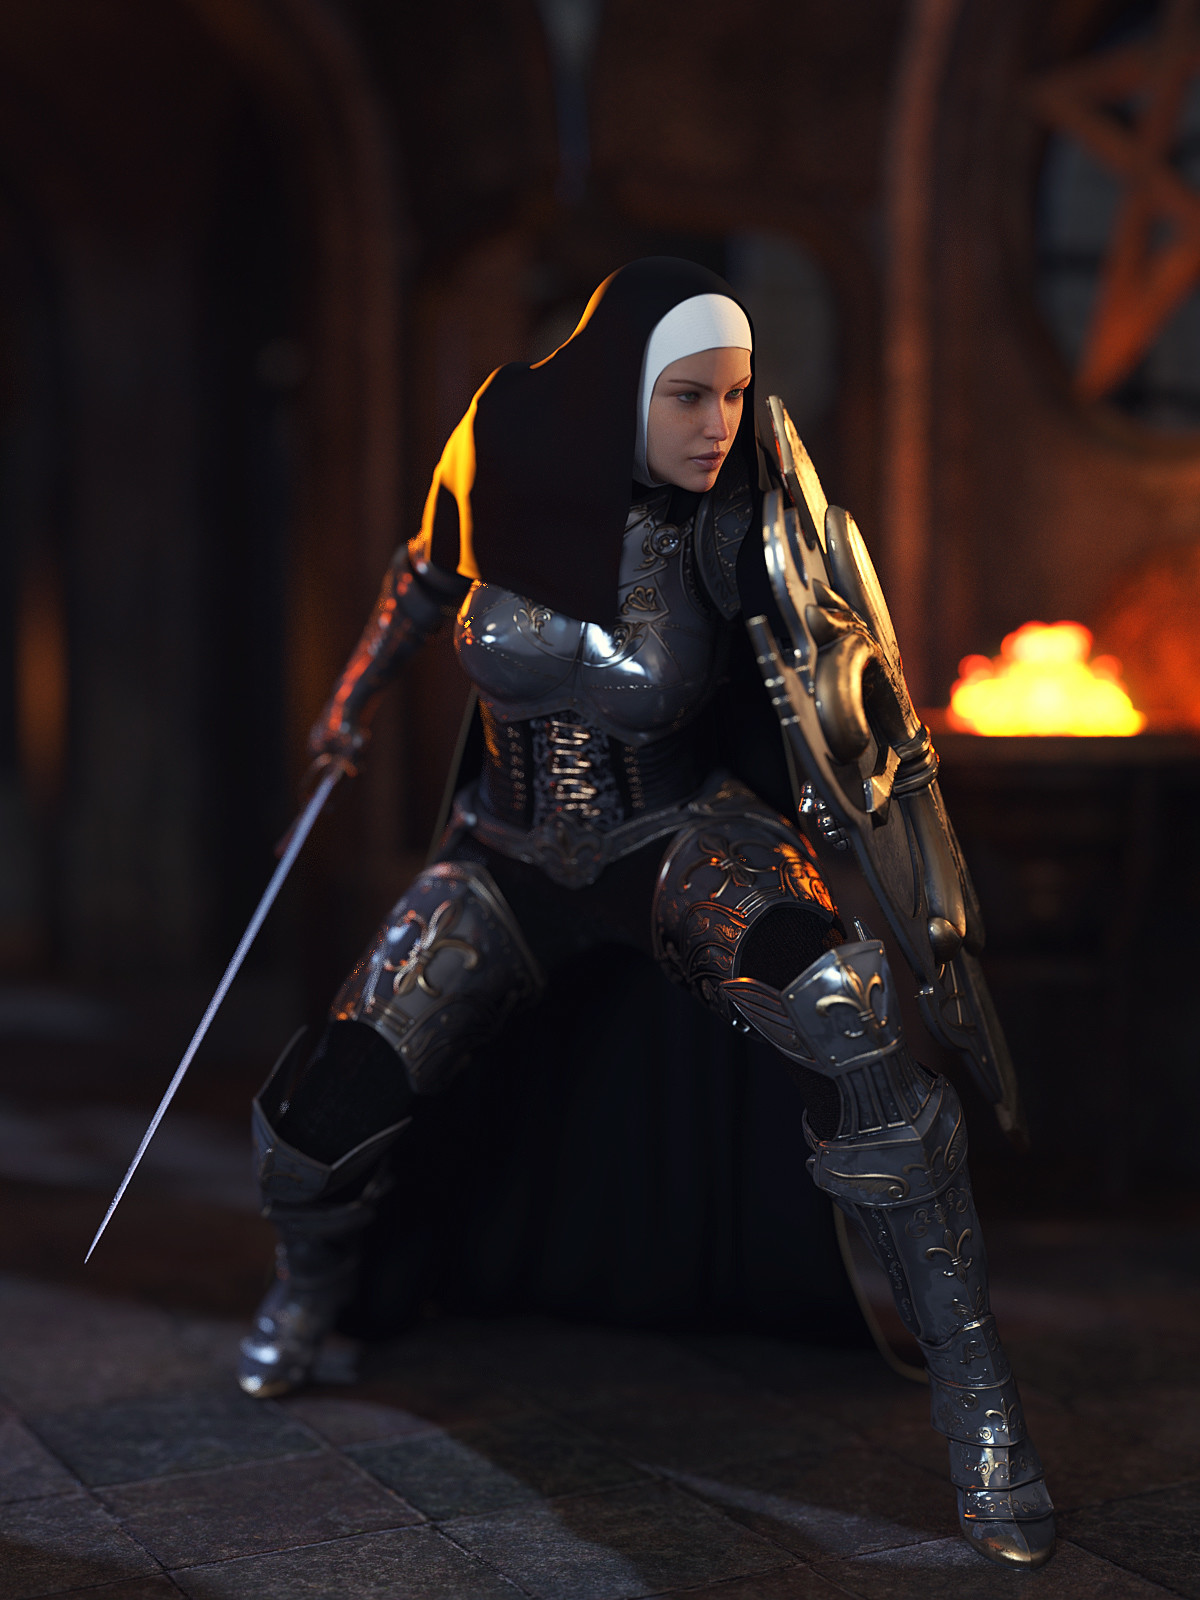 General 1200x1600 CGI nuns warrior fantasy art fantasy girl sword shield armor women with swords